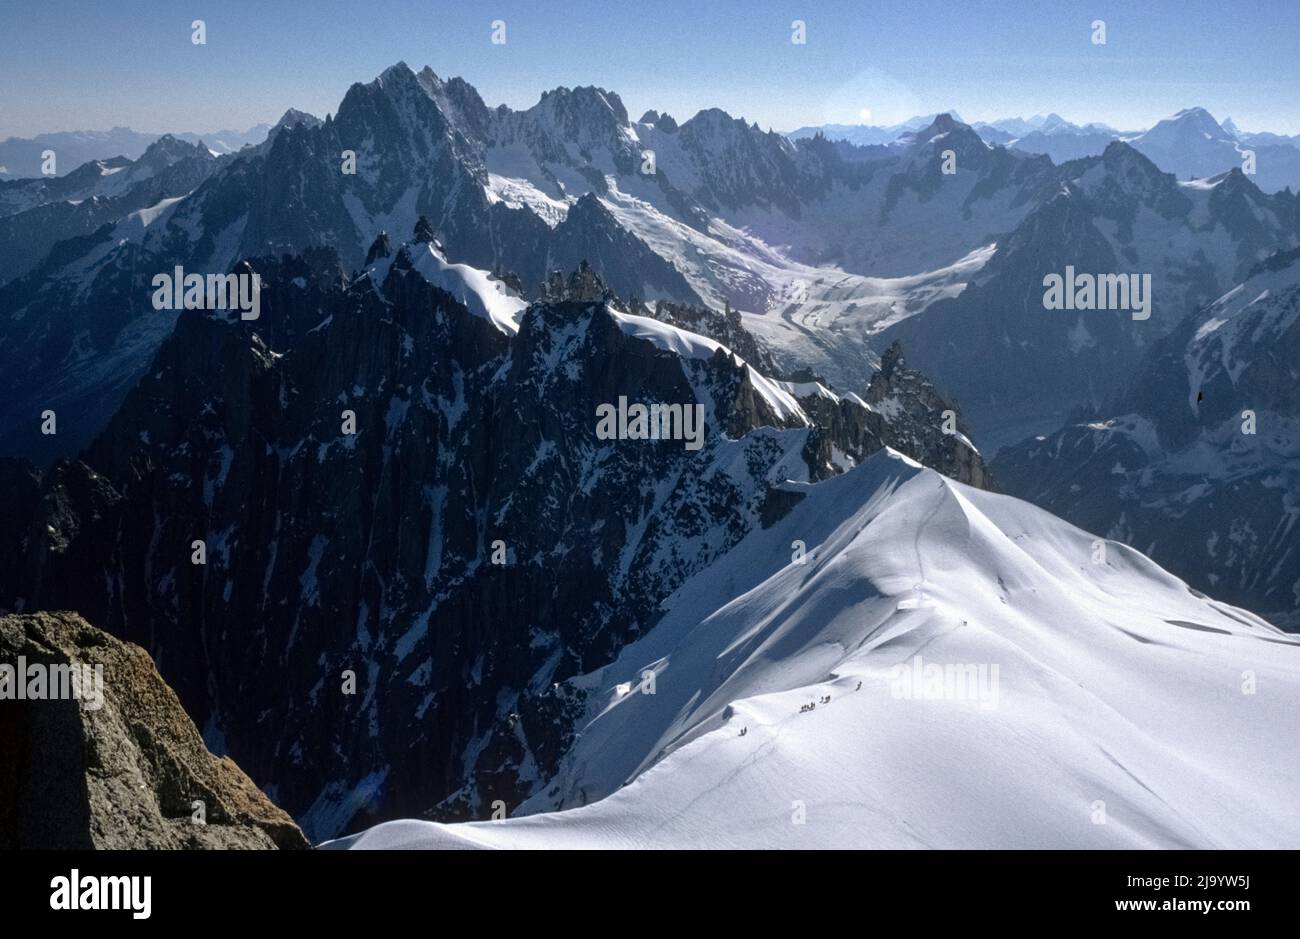 Aiguilles de Chamonix and Glacier de Talèfre with climbers on the snow ridge seen from the Aiguille du Midi, Chamonix-Mont-Blanc, France, 1990 Stock Photo